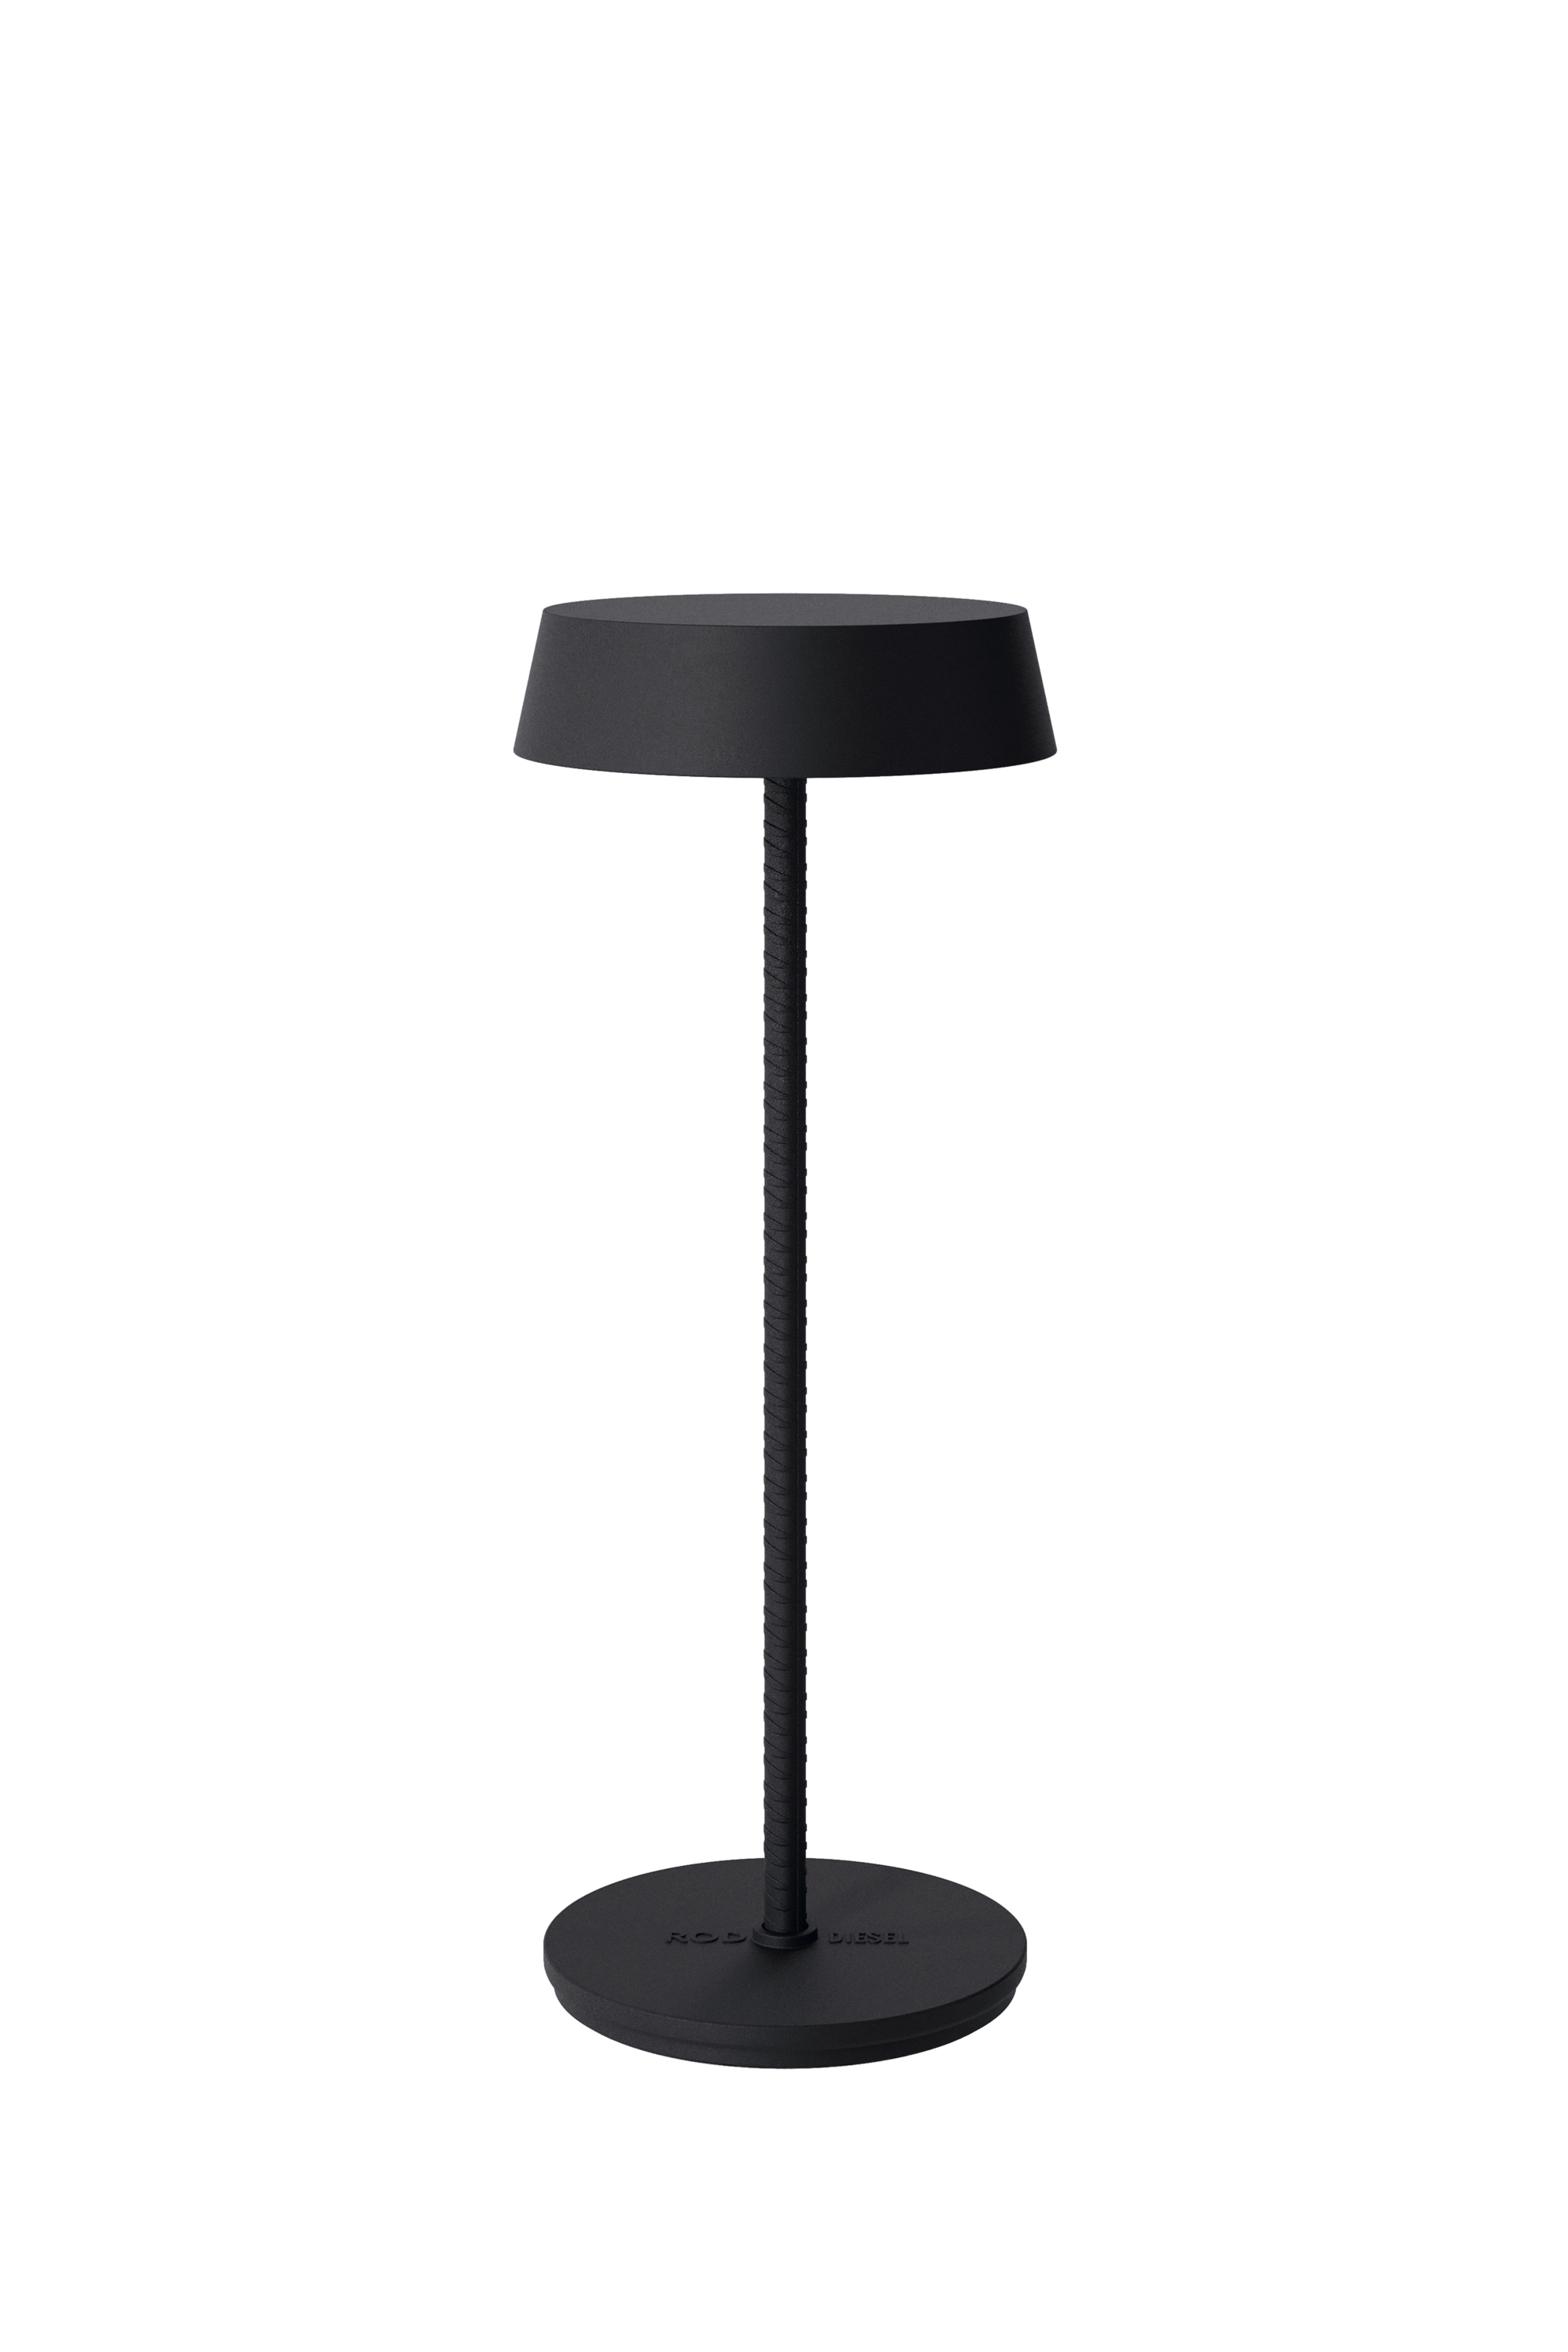 51181 2020 ROD CORDLESS TABLE LAMP DARK, Noir